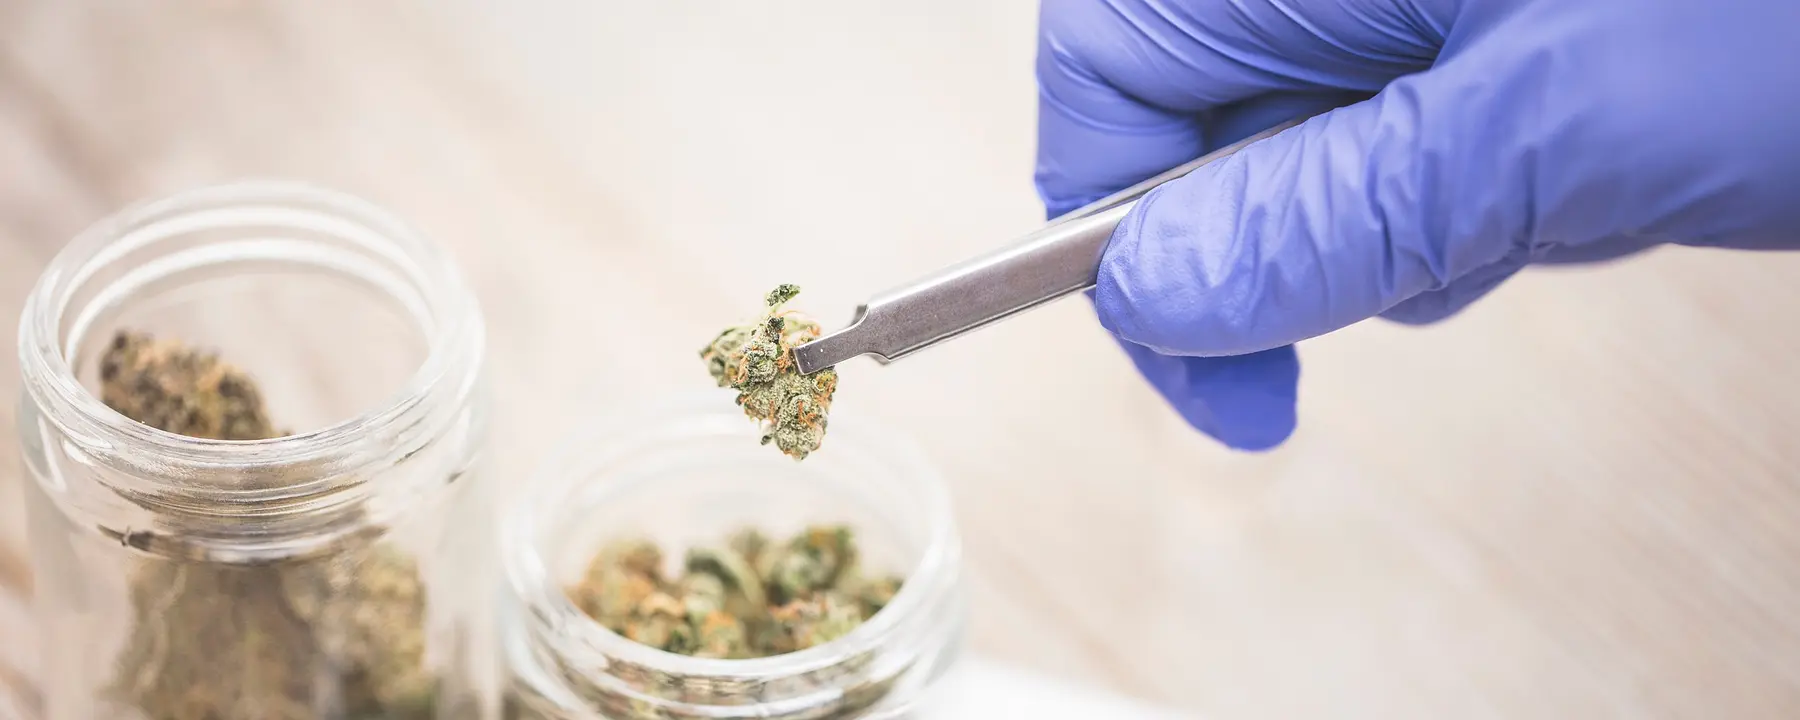 A scientist examines medical marijuana